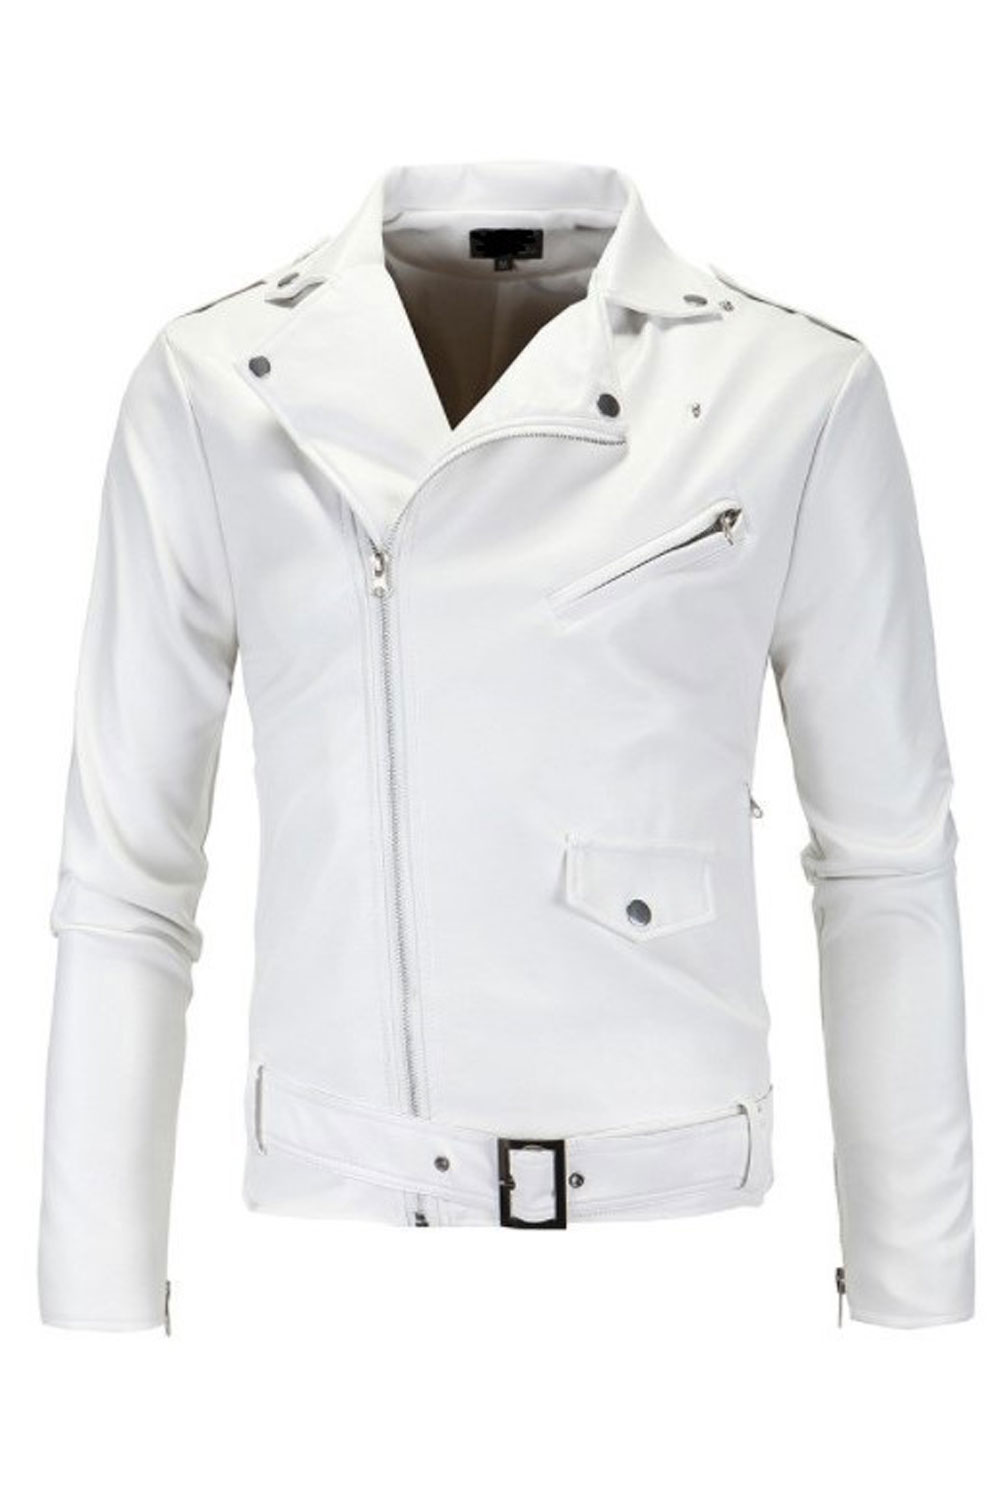 white leather jacket mens zara